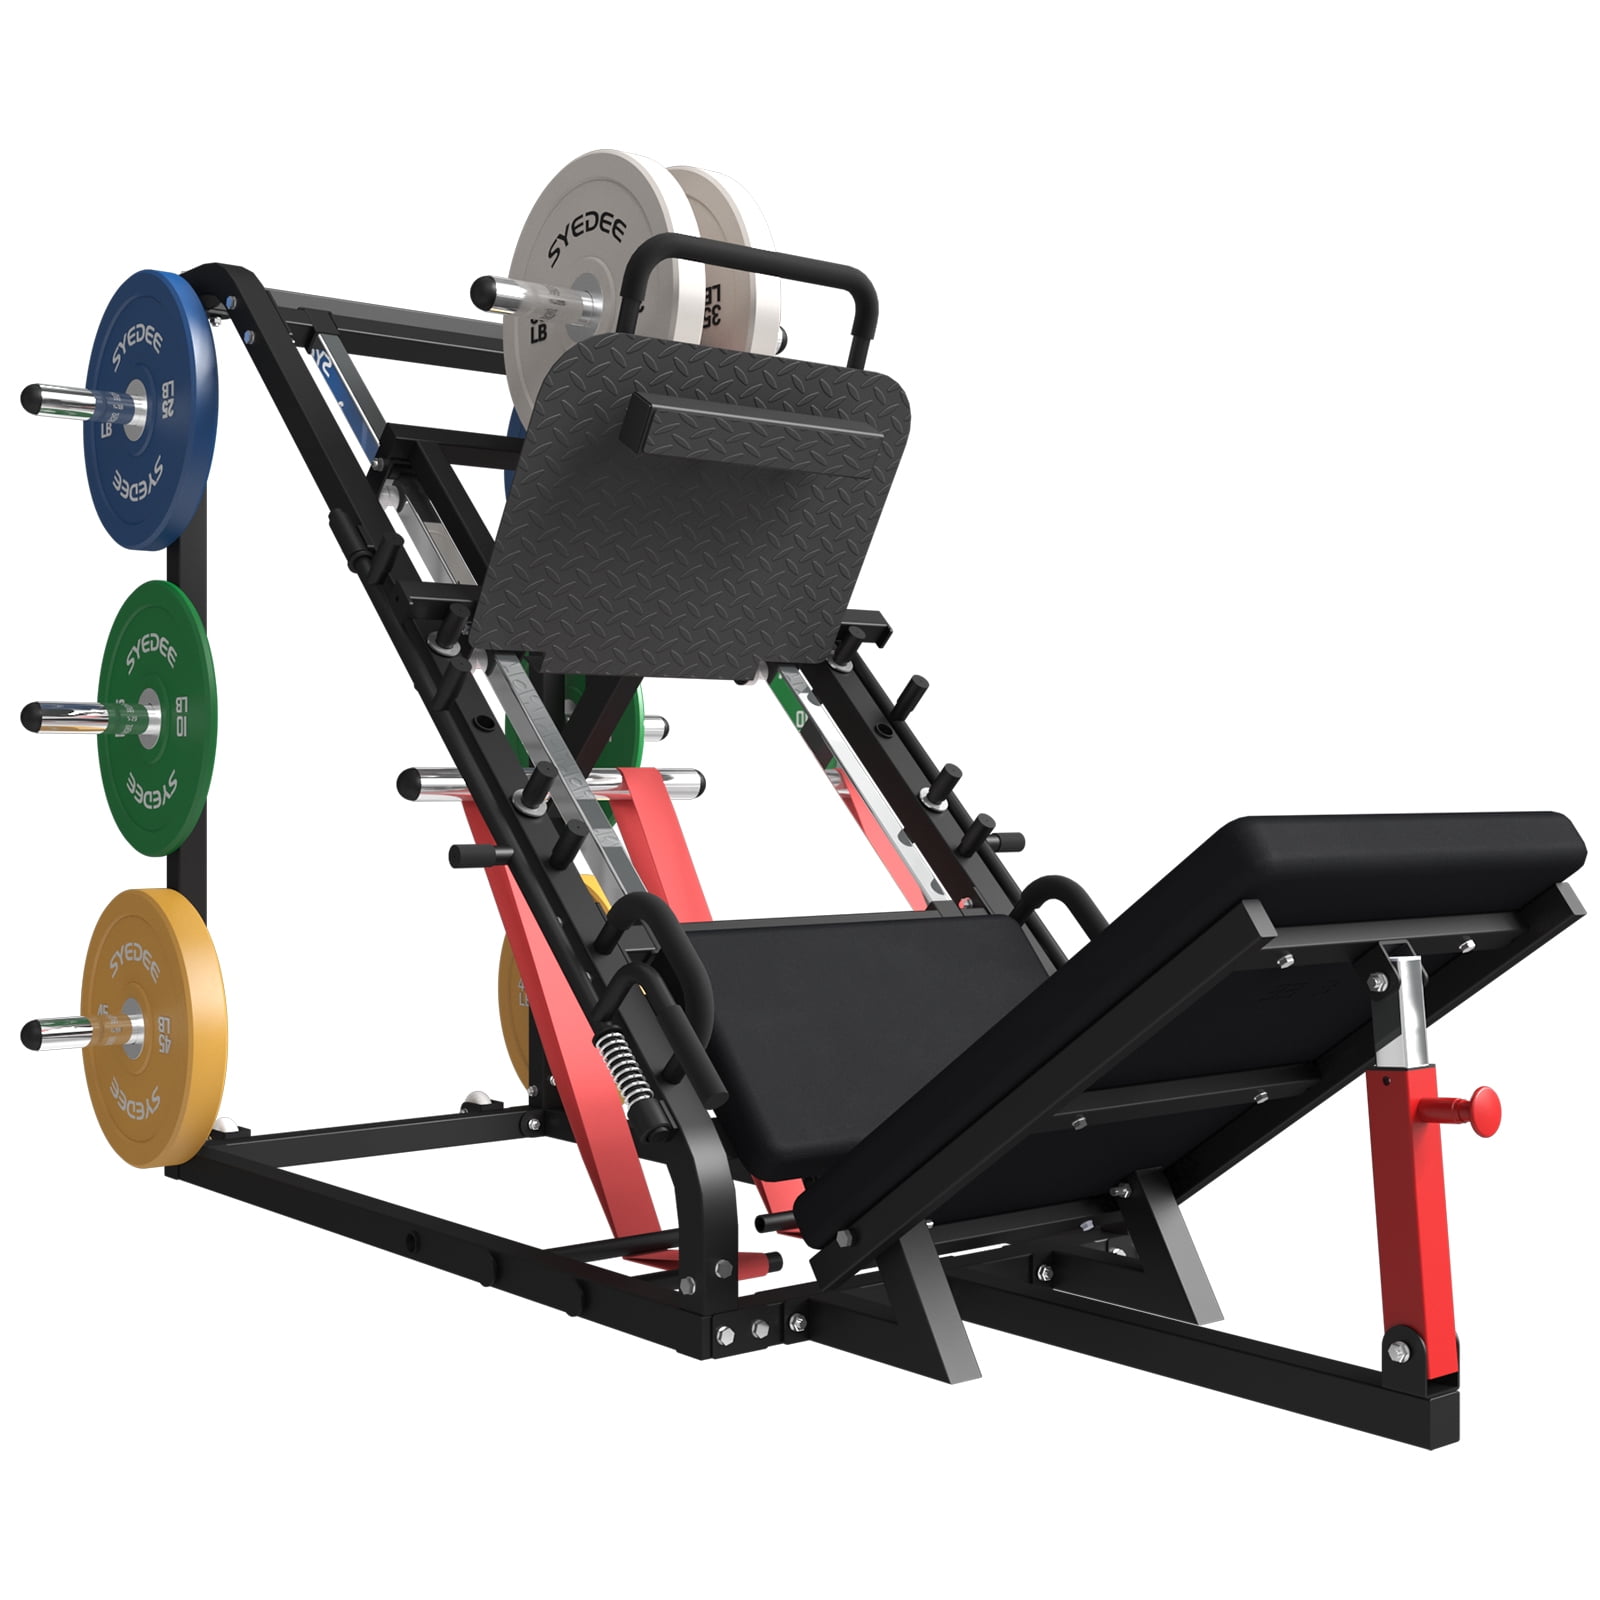 Syedee 45 Degree Leg Machine DD05 with Calf Block,1500LBS Capacity Leg Press Home Gym Machine